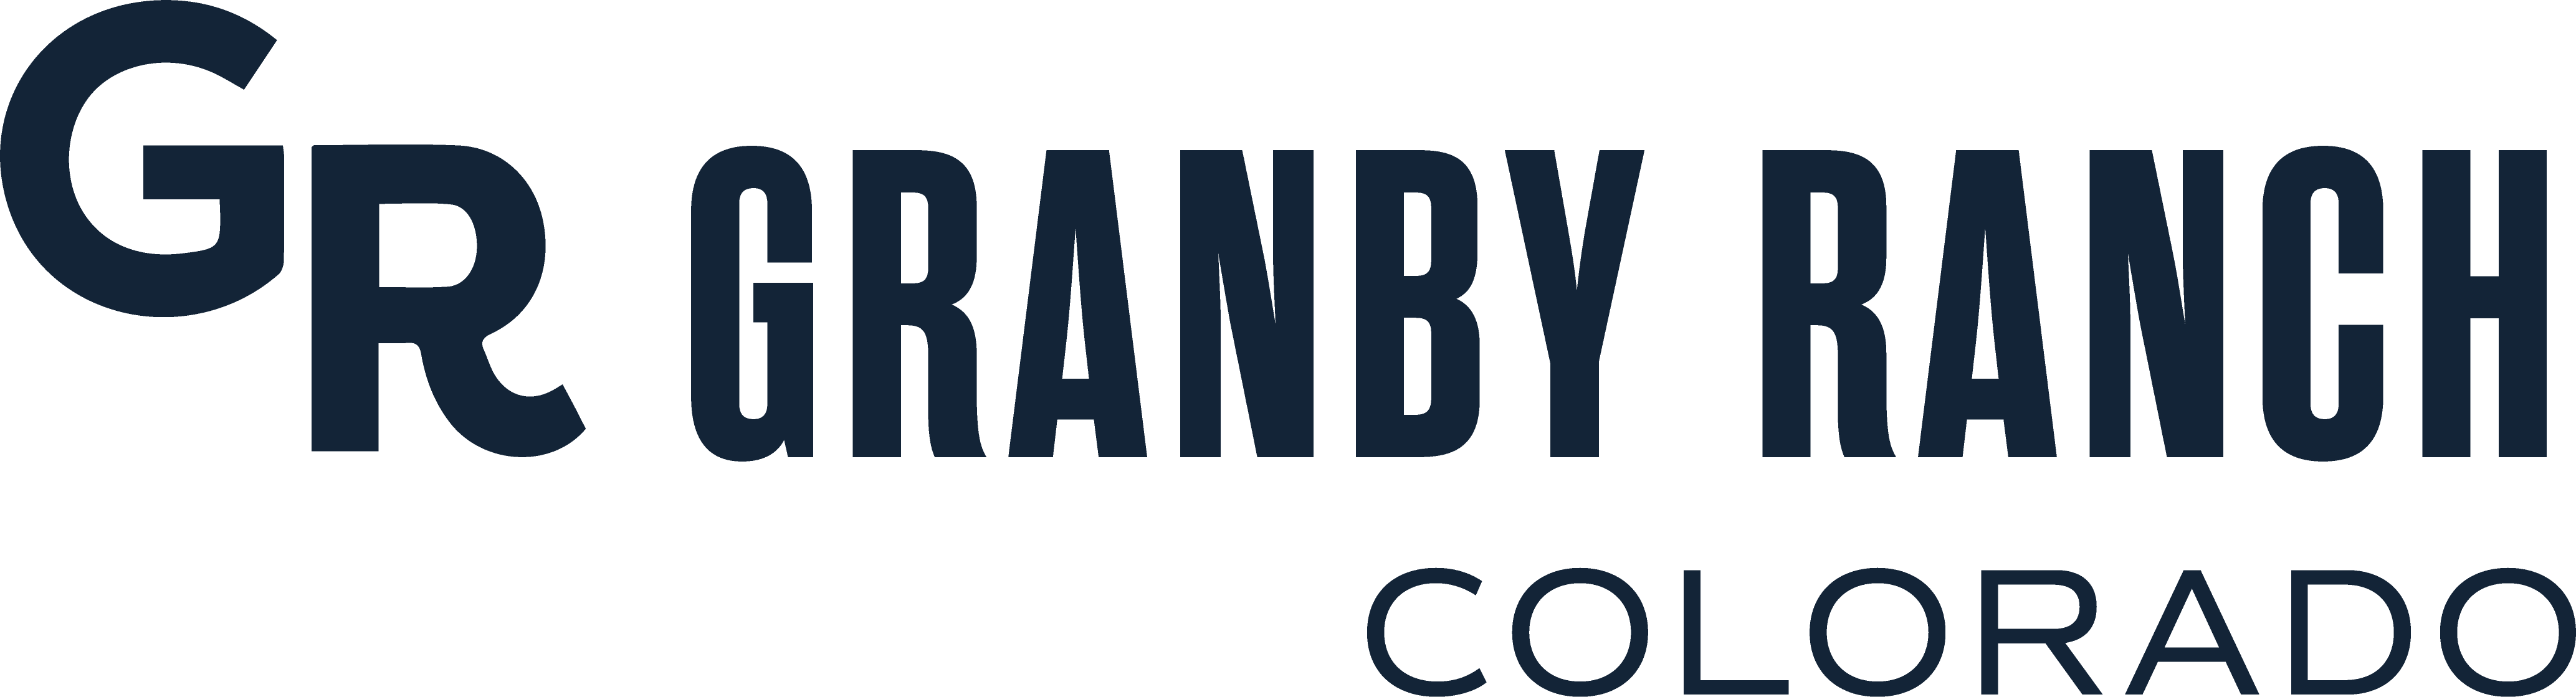 Granby Ranch logo